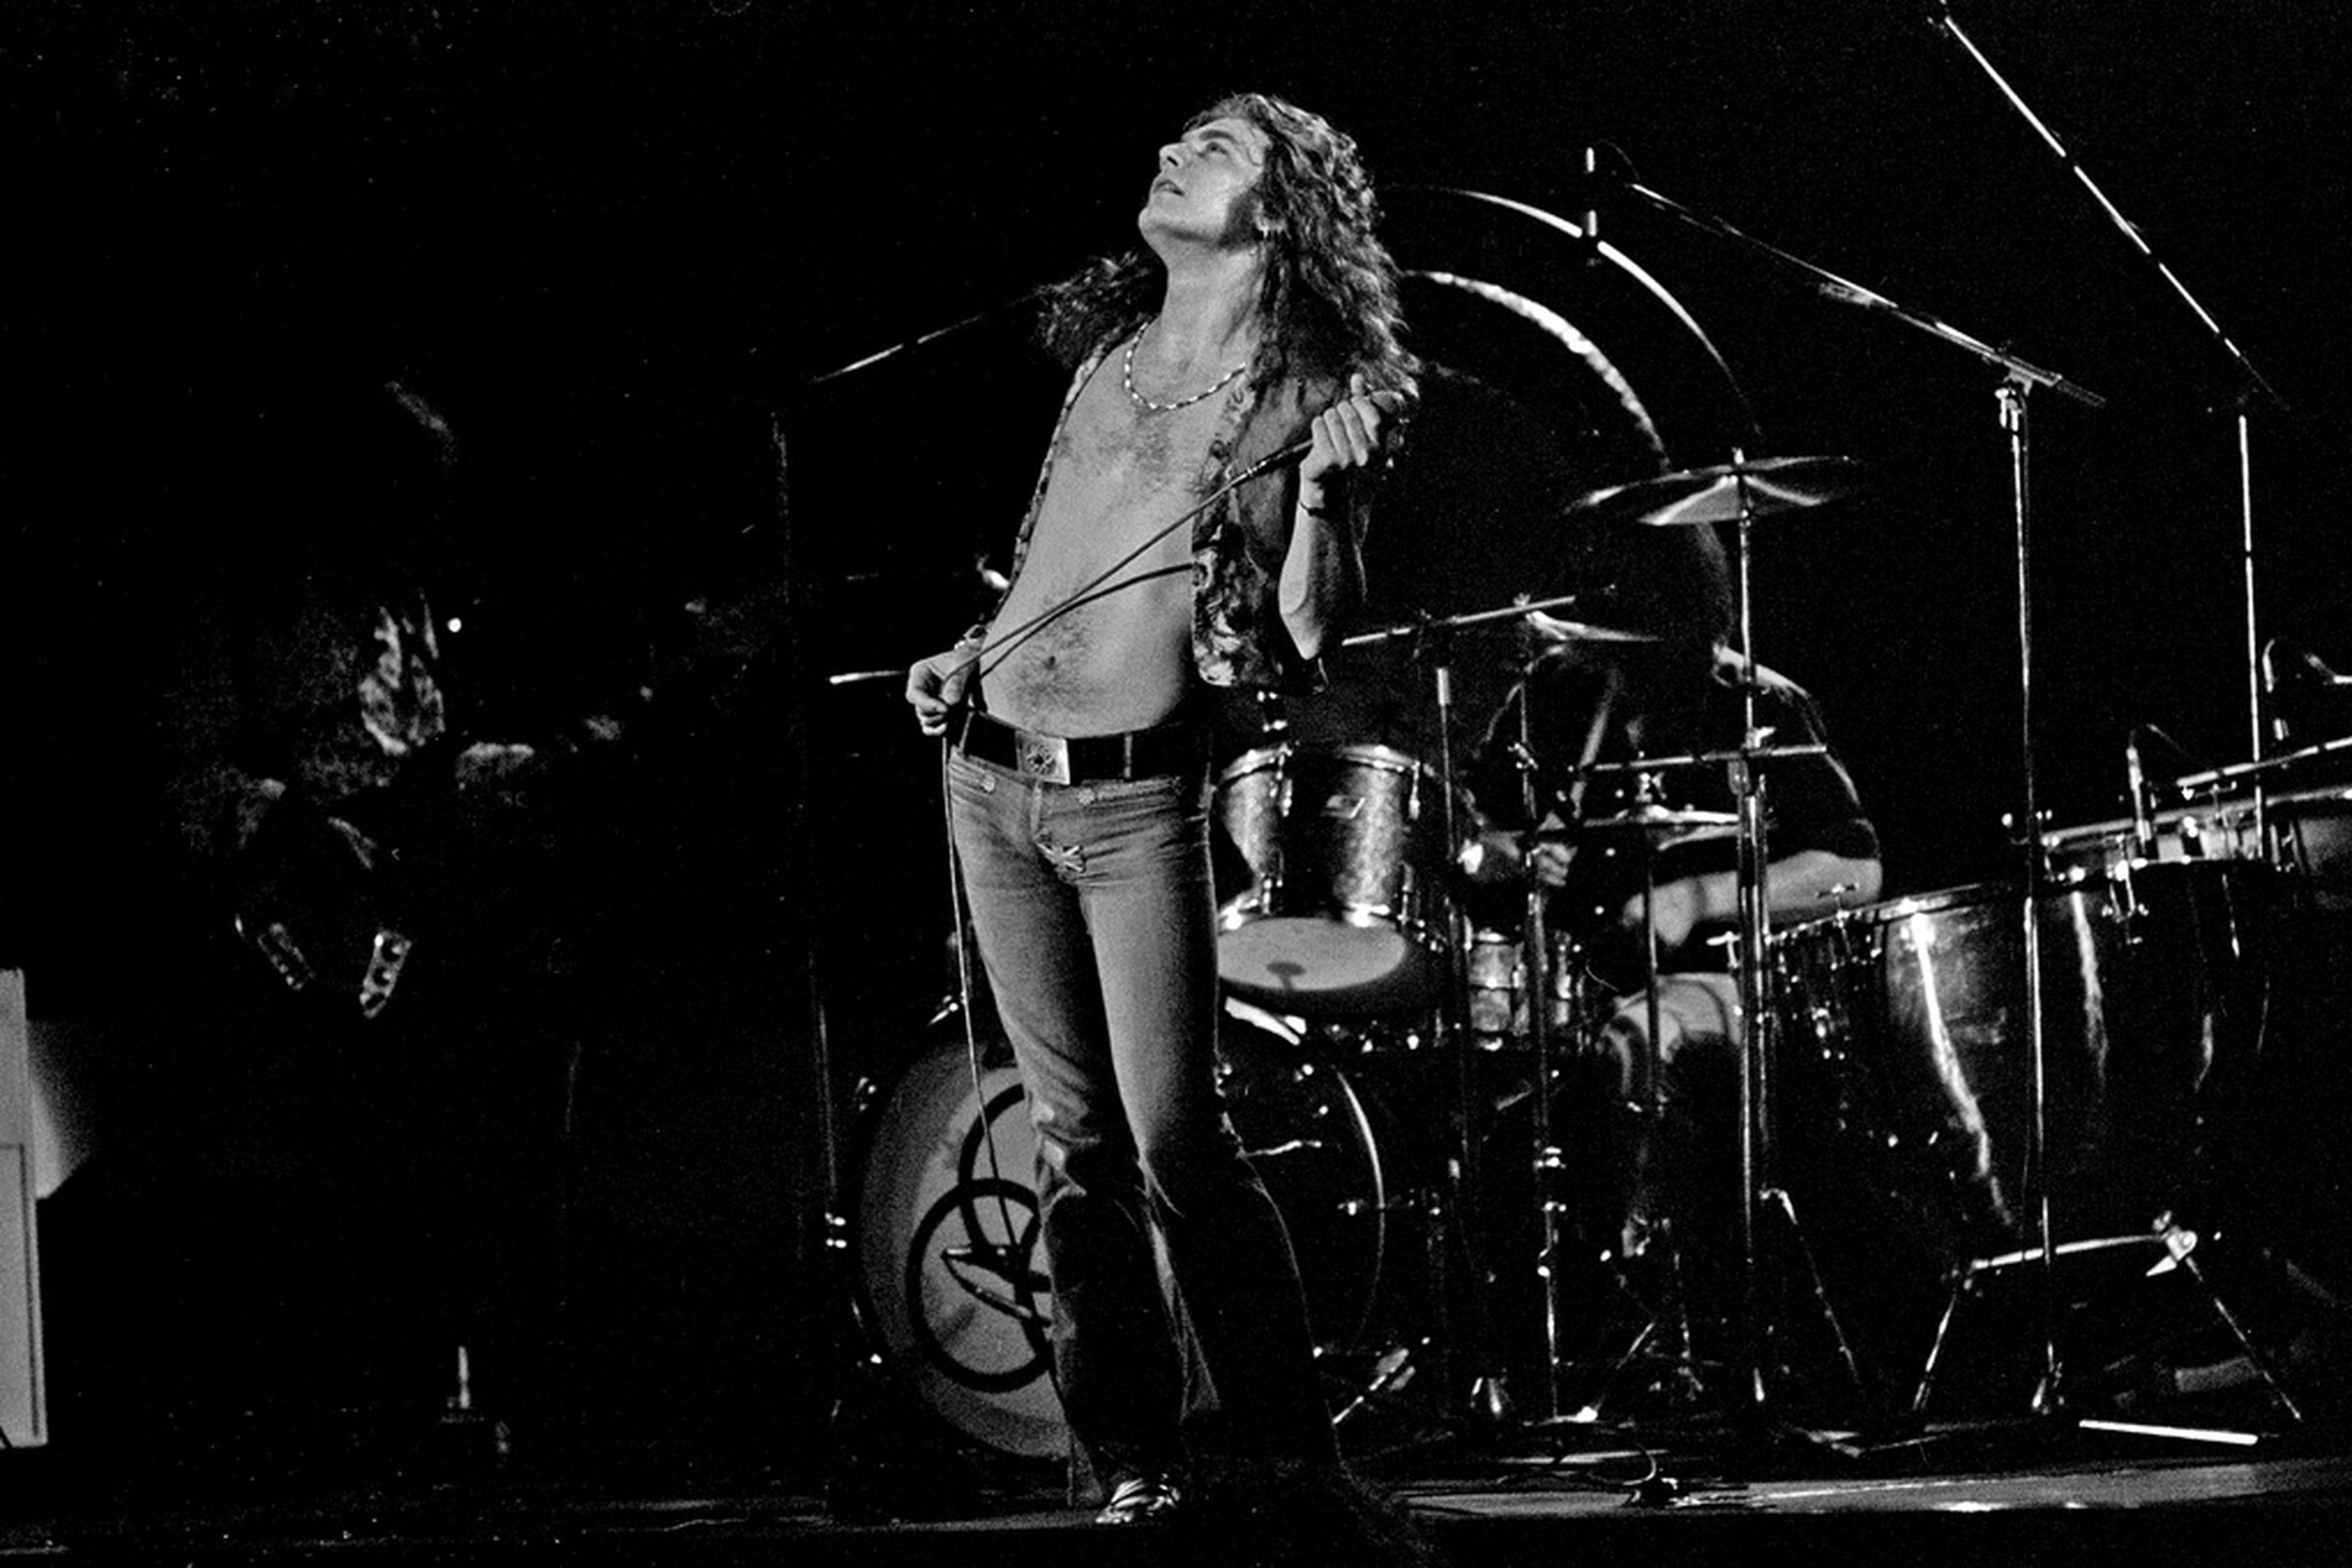 Led Zeppelin http://www.flickr.com/photos/heiner1947/4405597535/